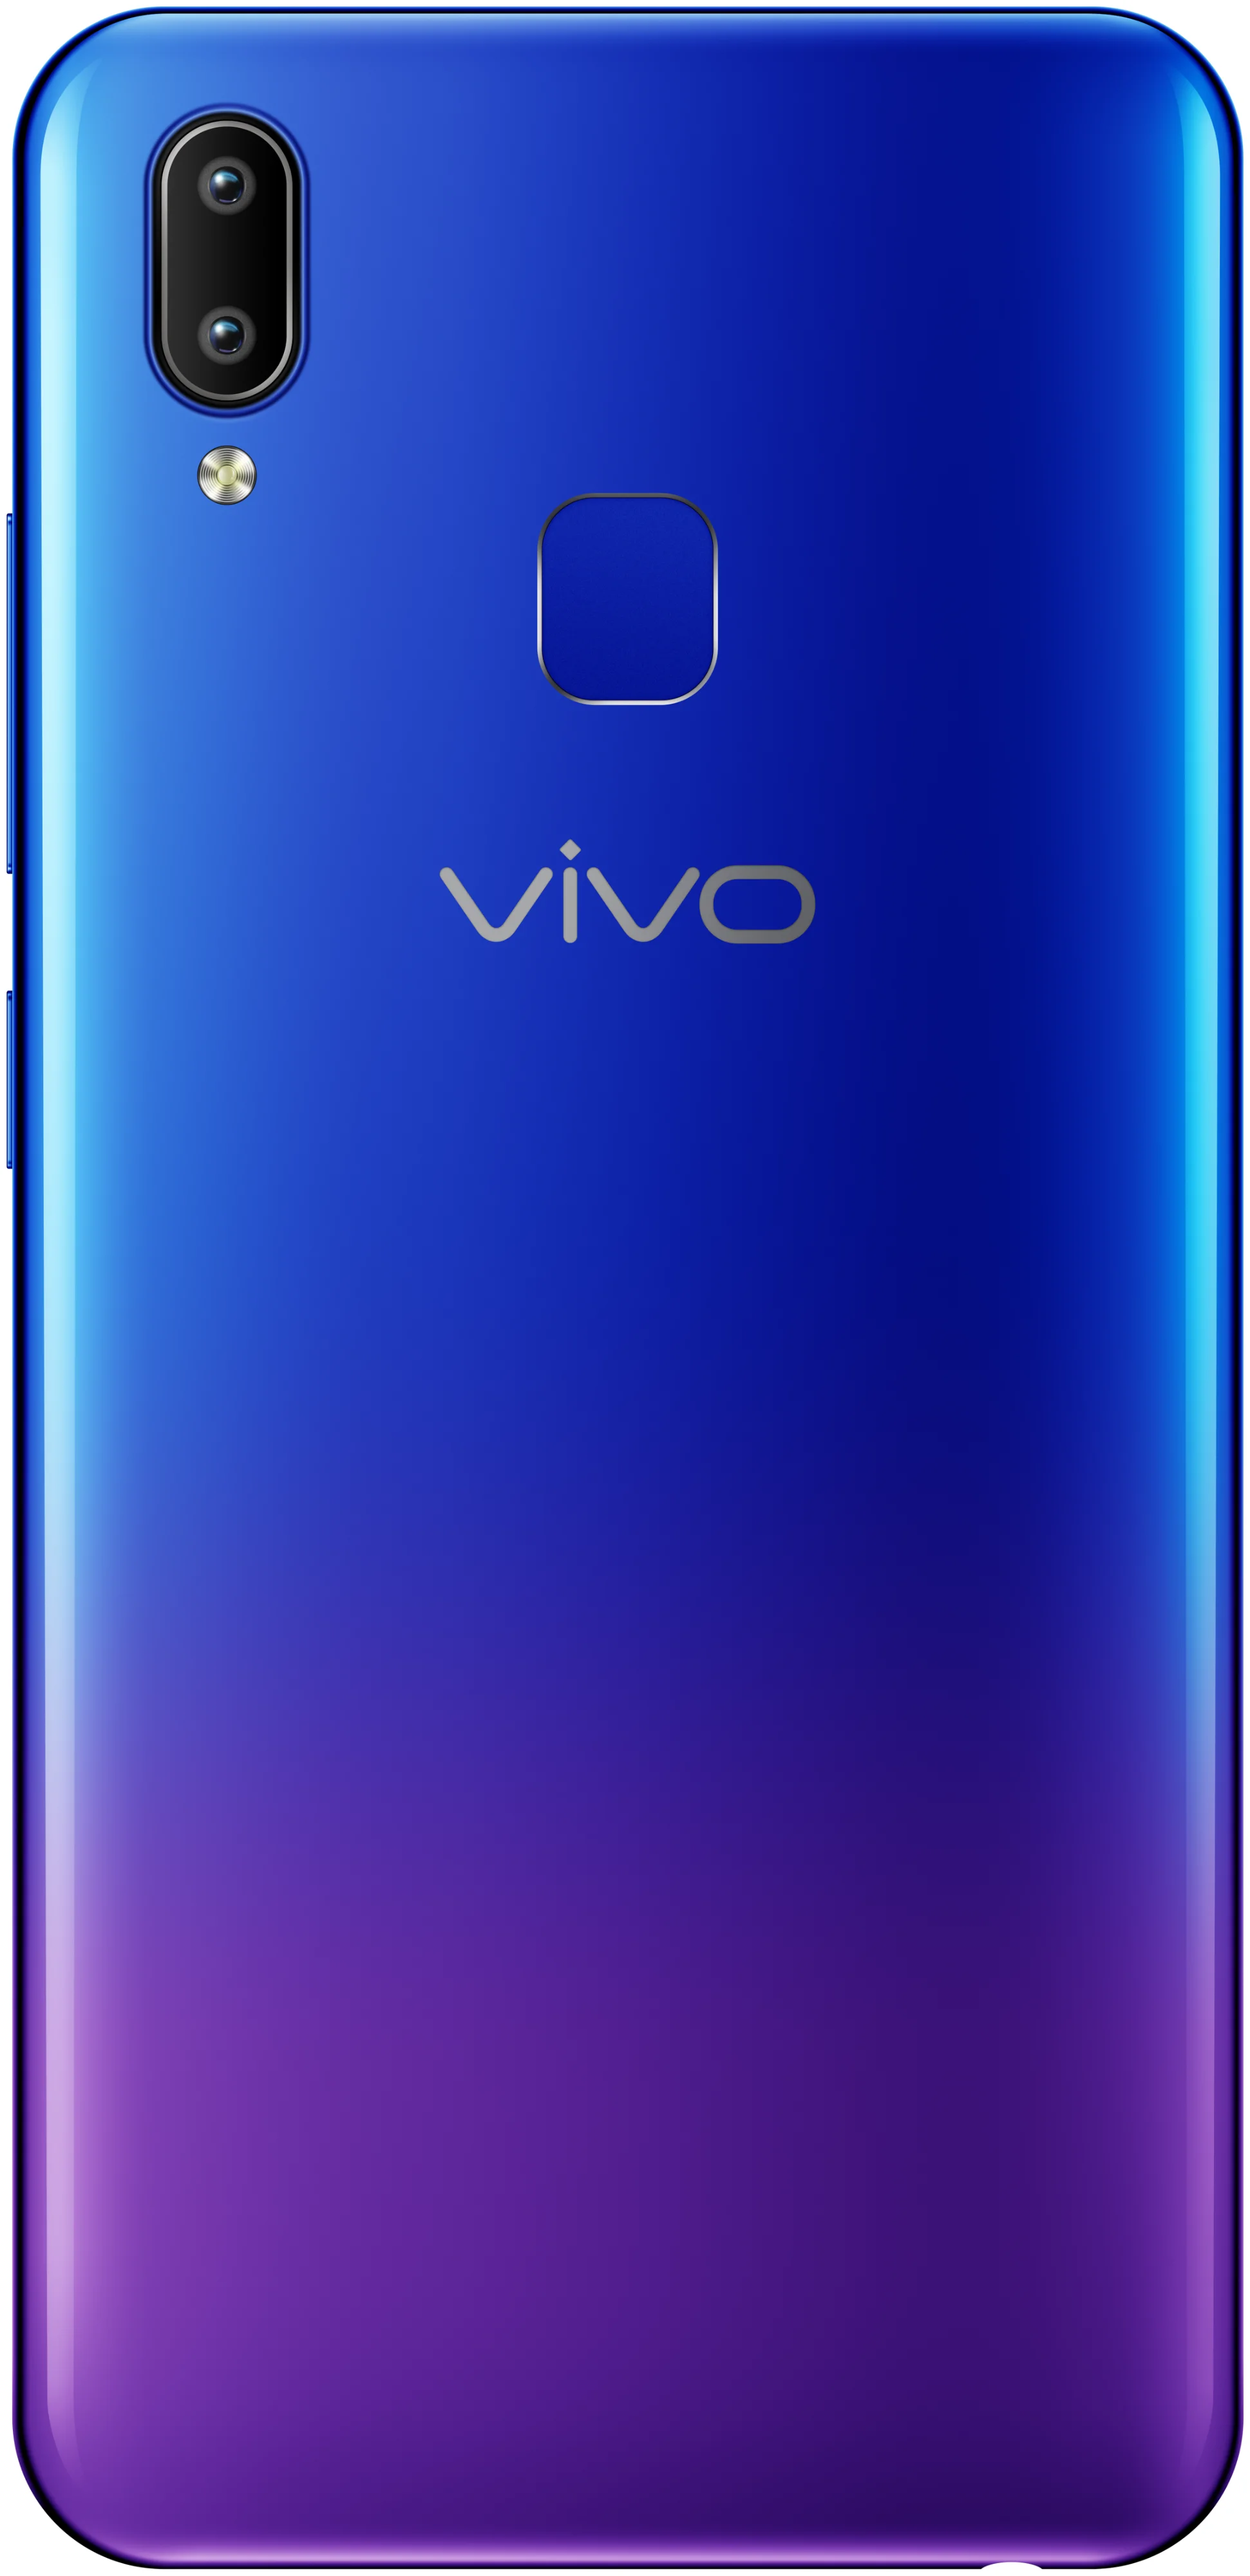 vivo Y93 432GB Dual Sim - операционная система: Android 8.1